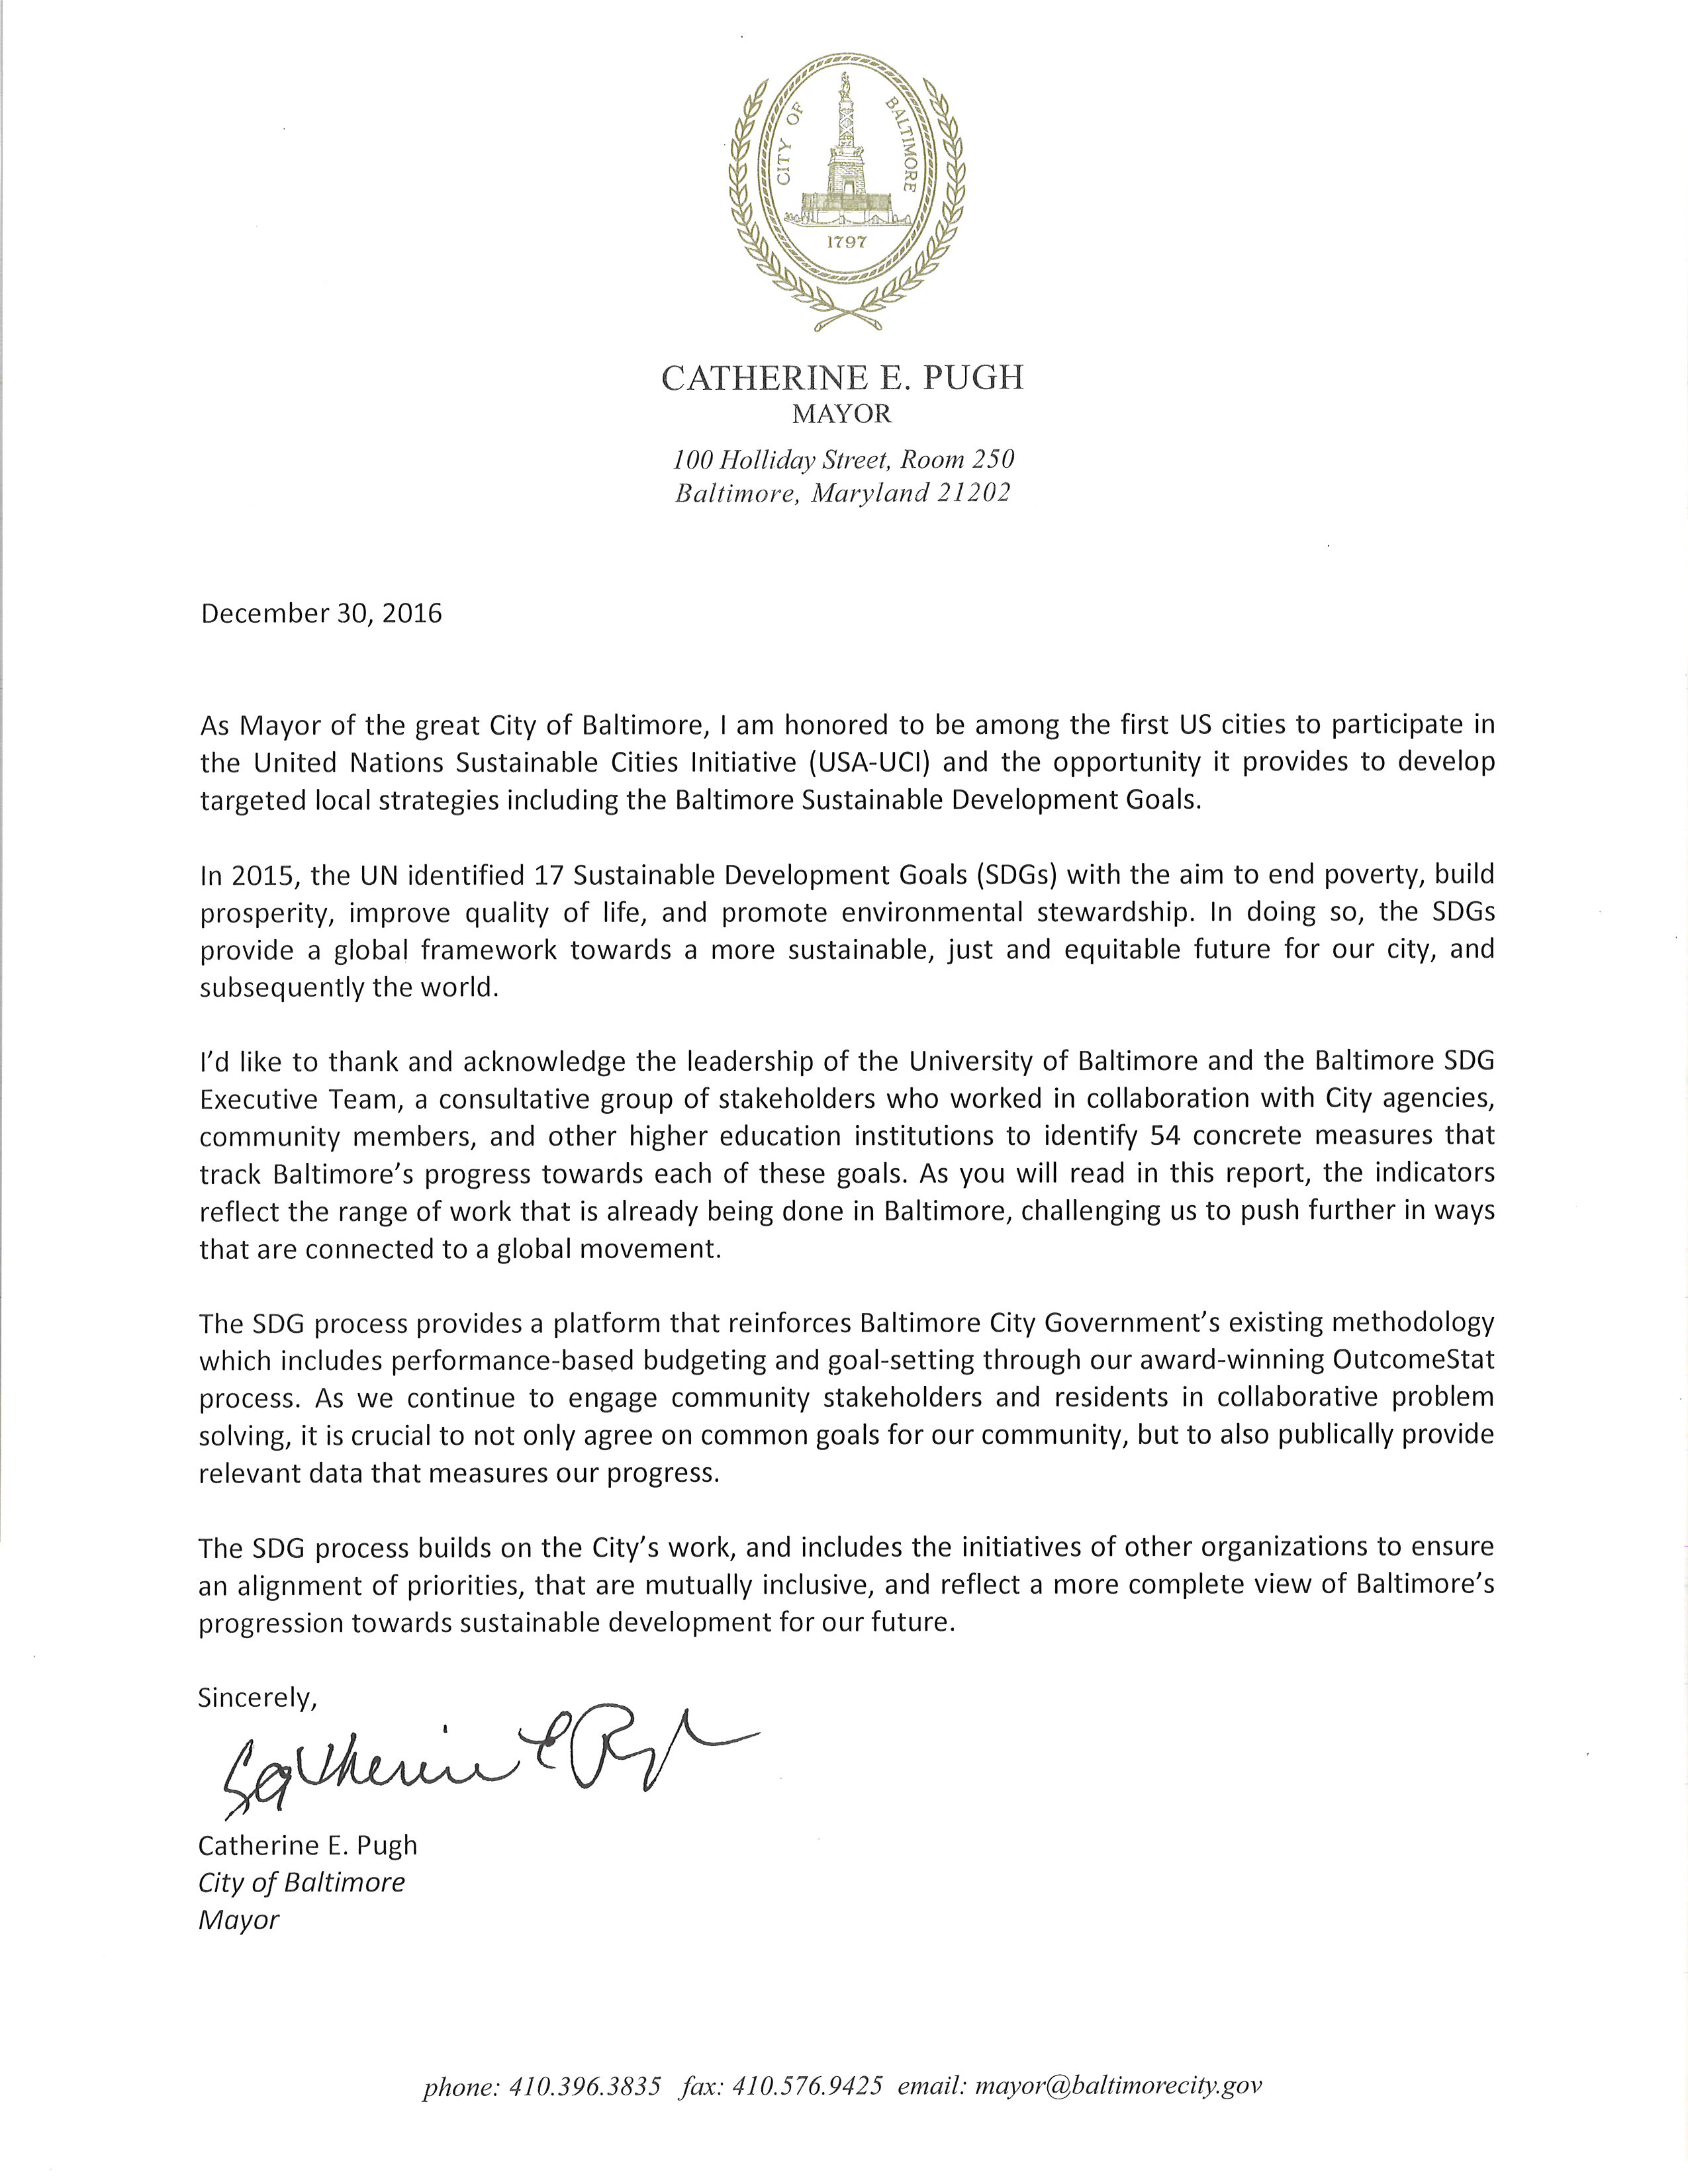 Letter from Mayor Pugh